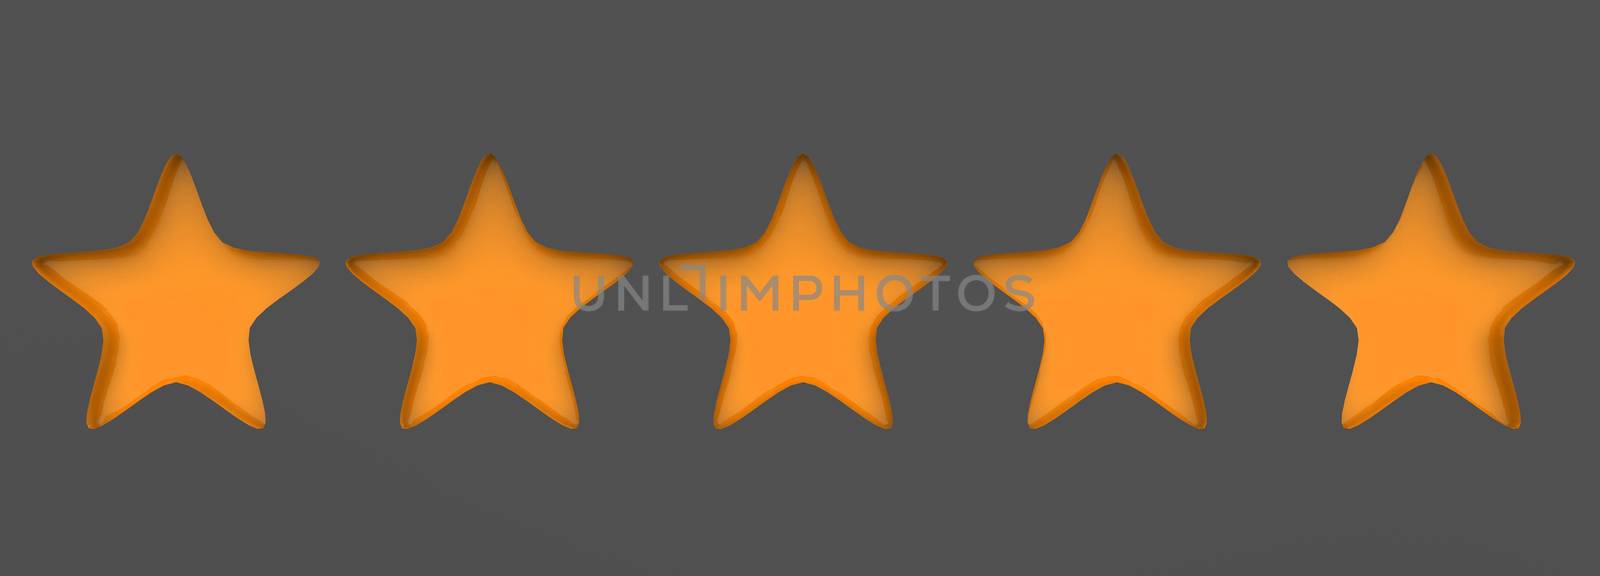 3d five orange star on color background. Render and illustration of golden star for premium review by Andreajk3